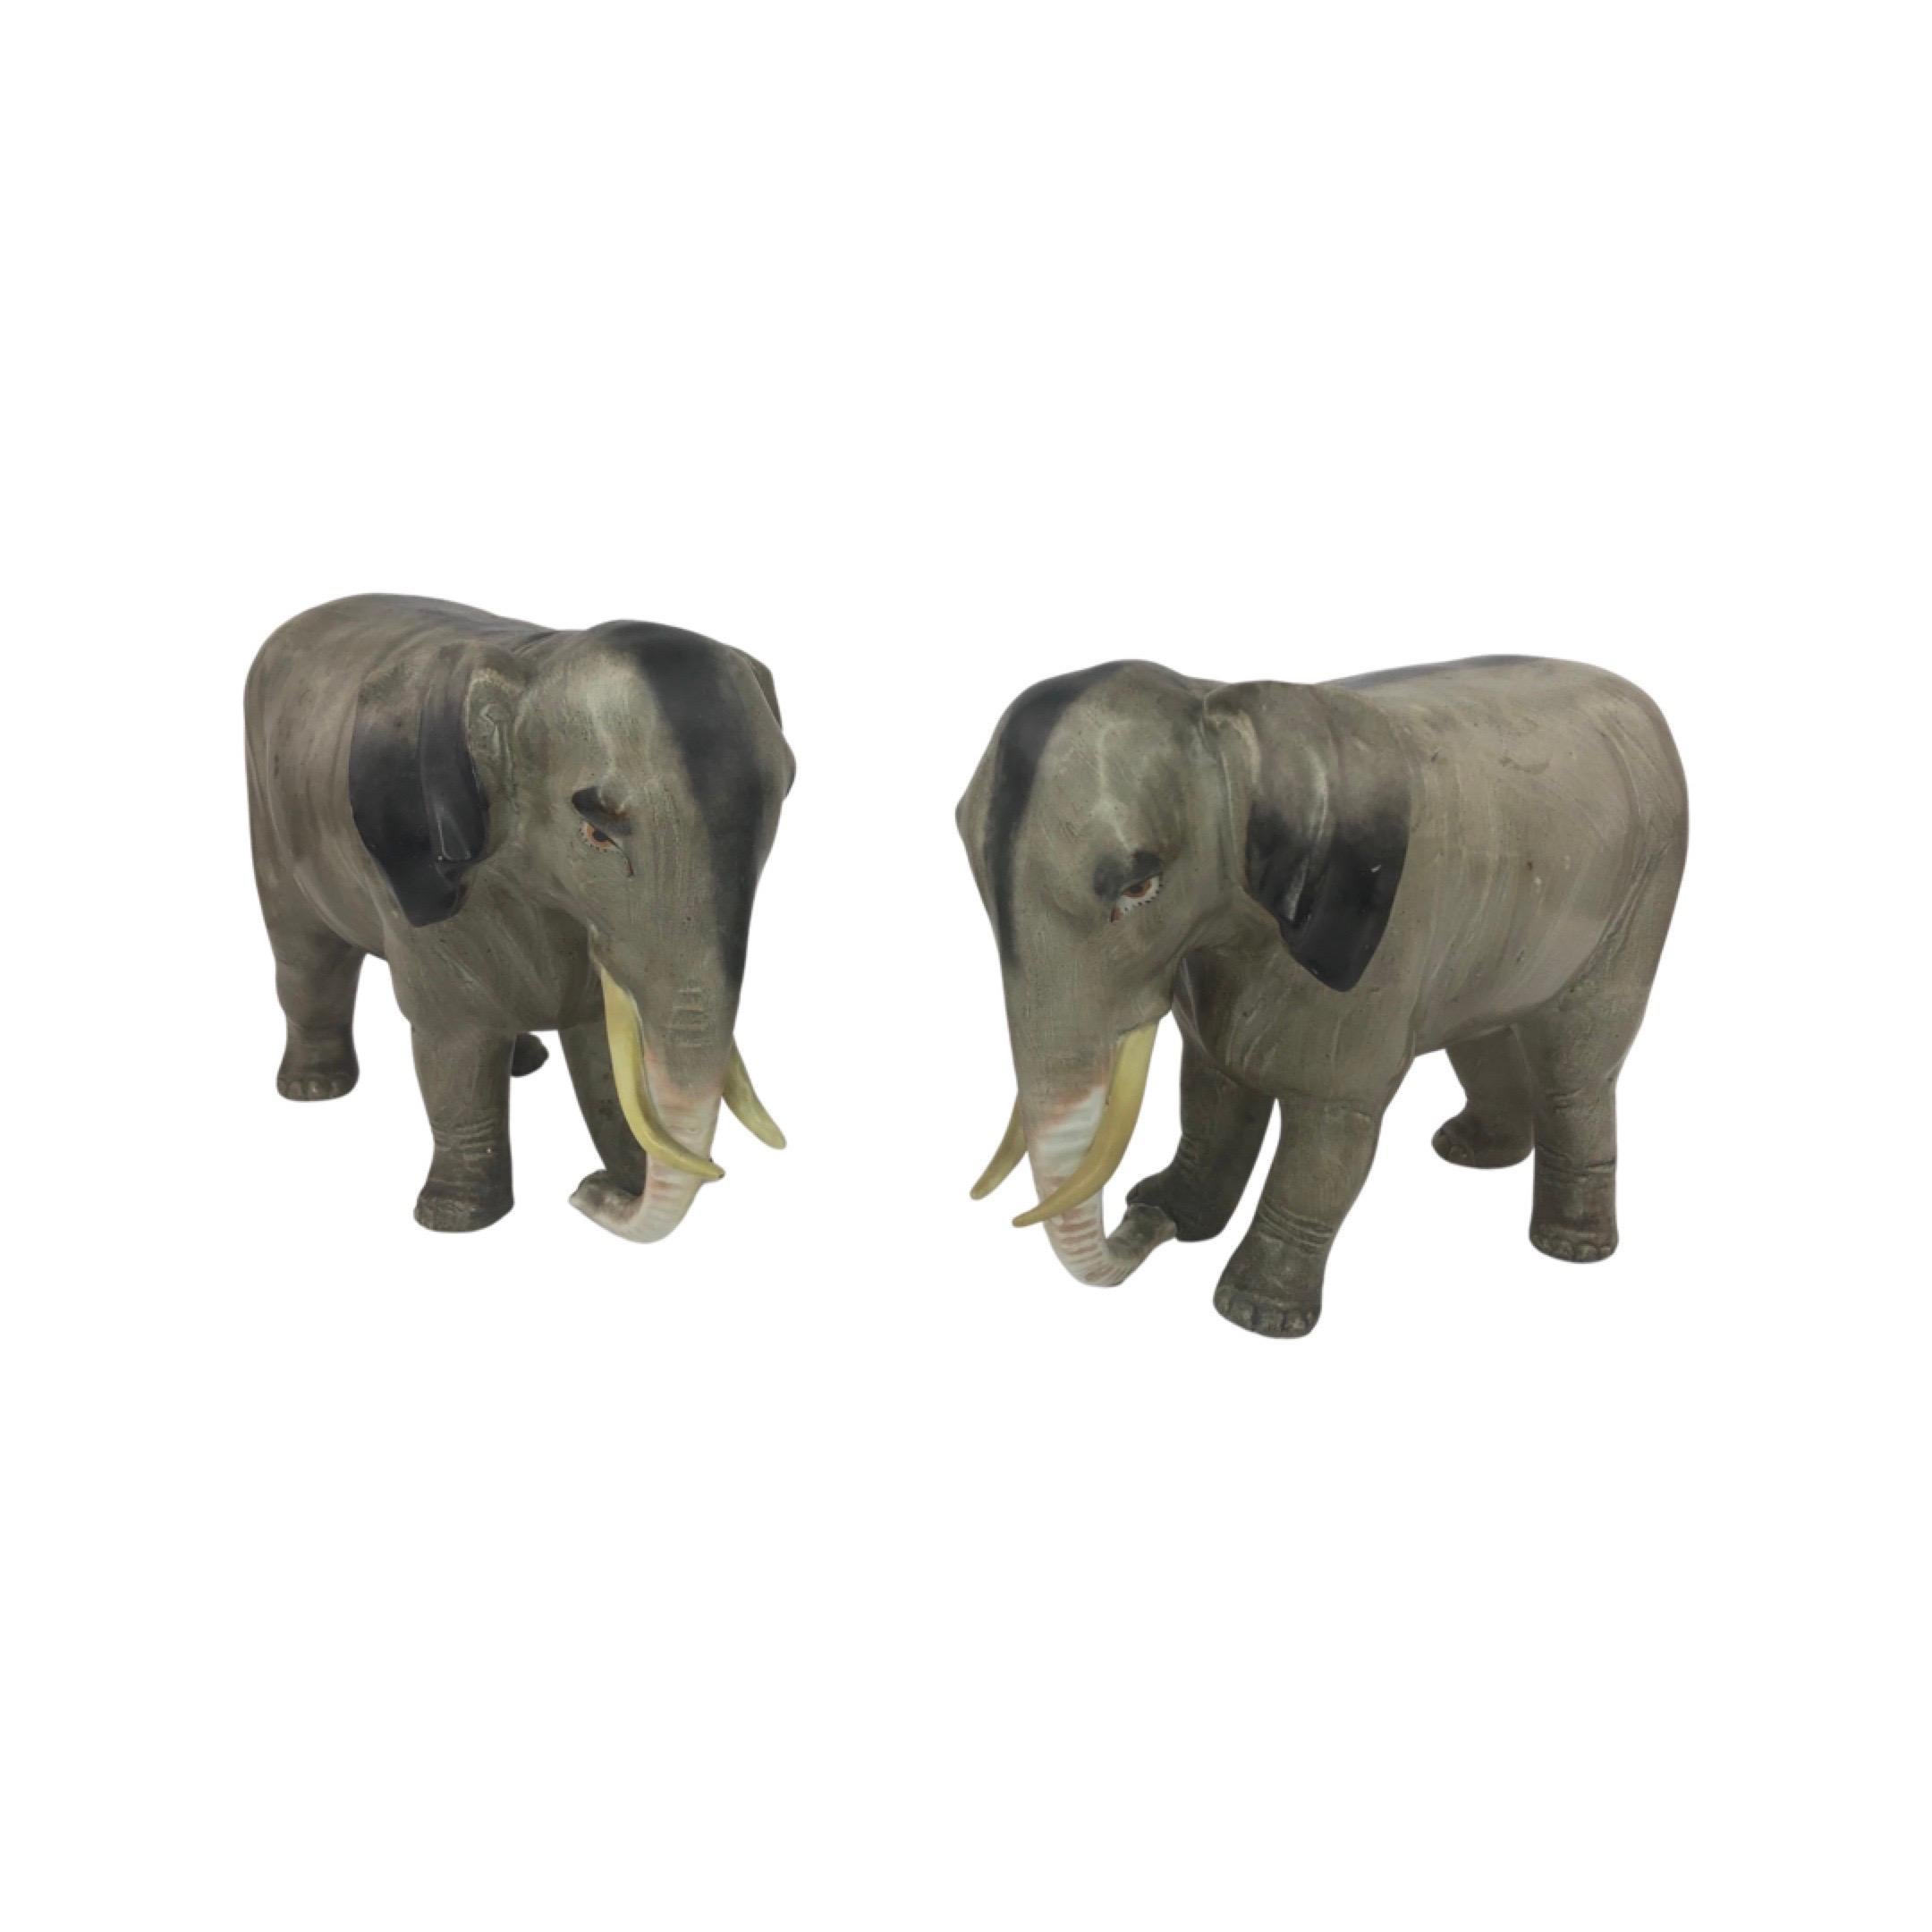 1920s German Ceramic Elephants Figures- Pair For Sale 3